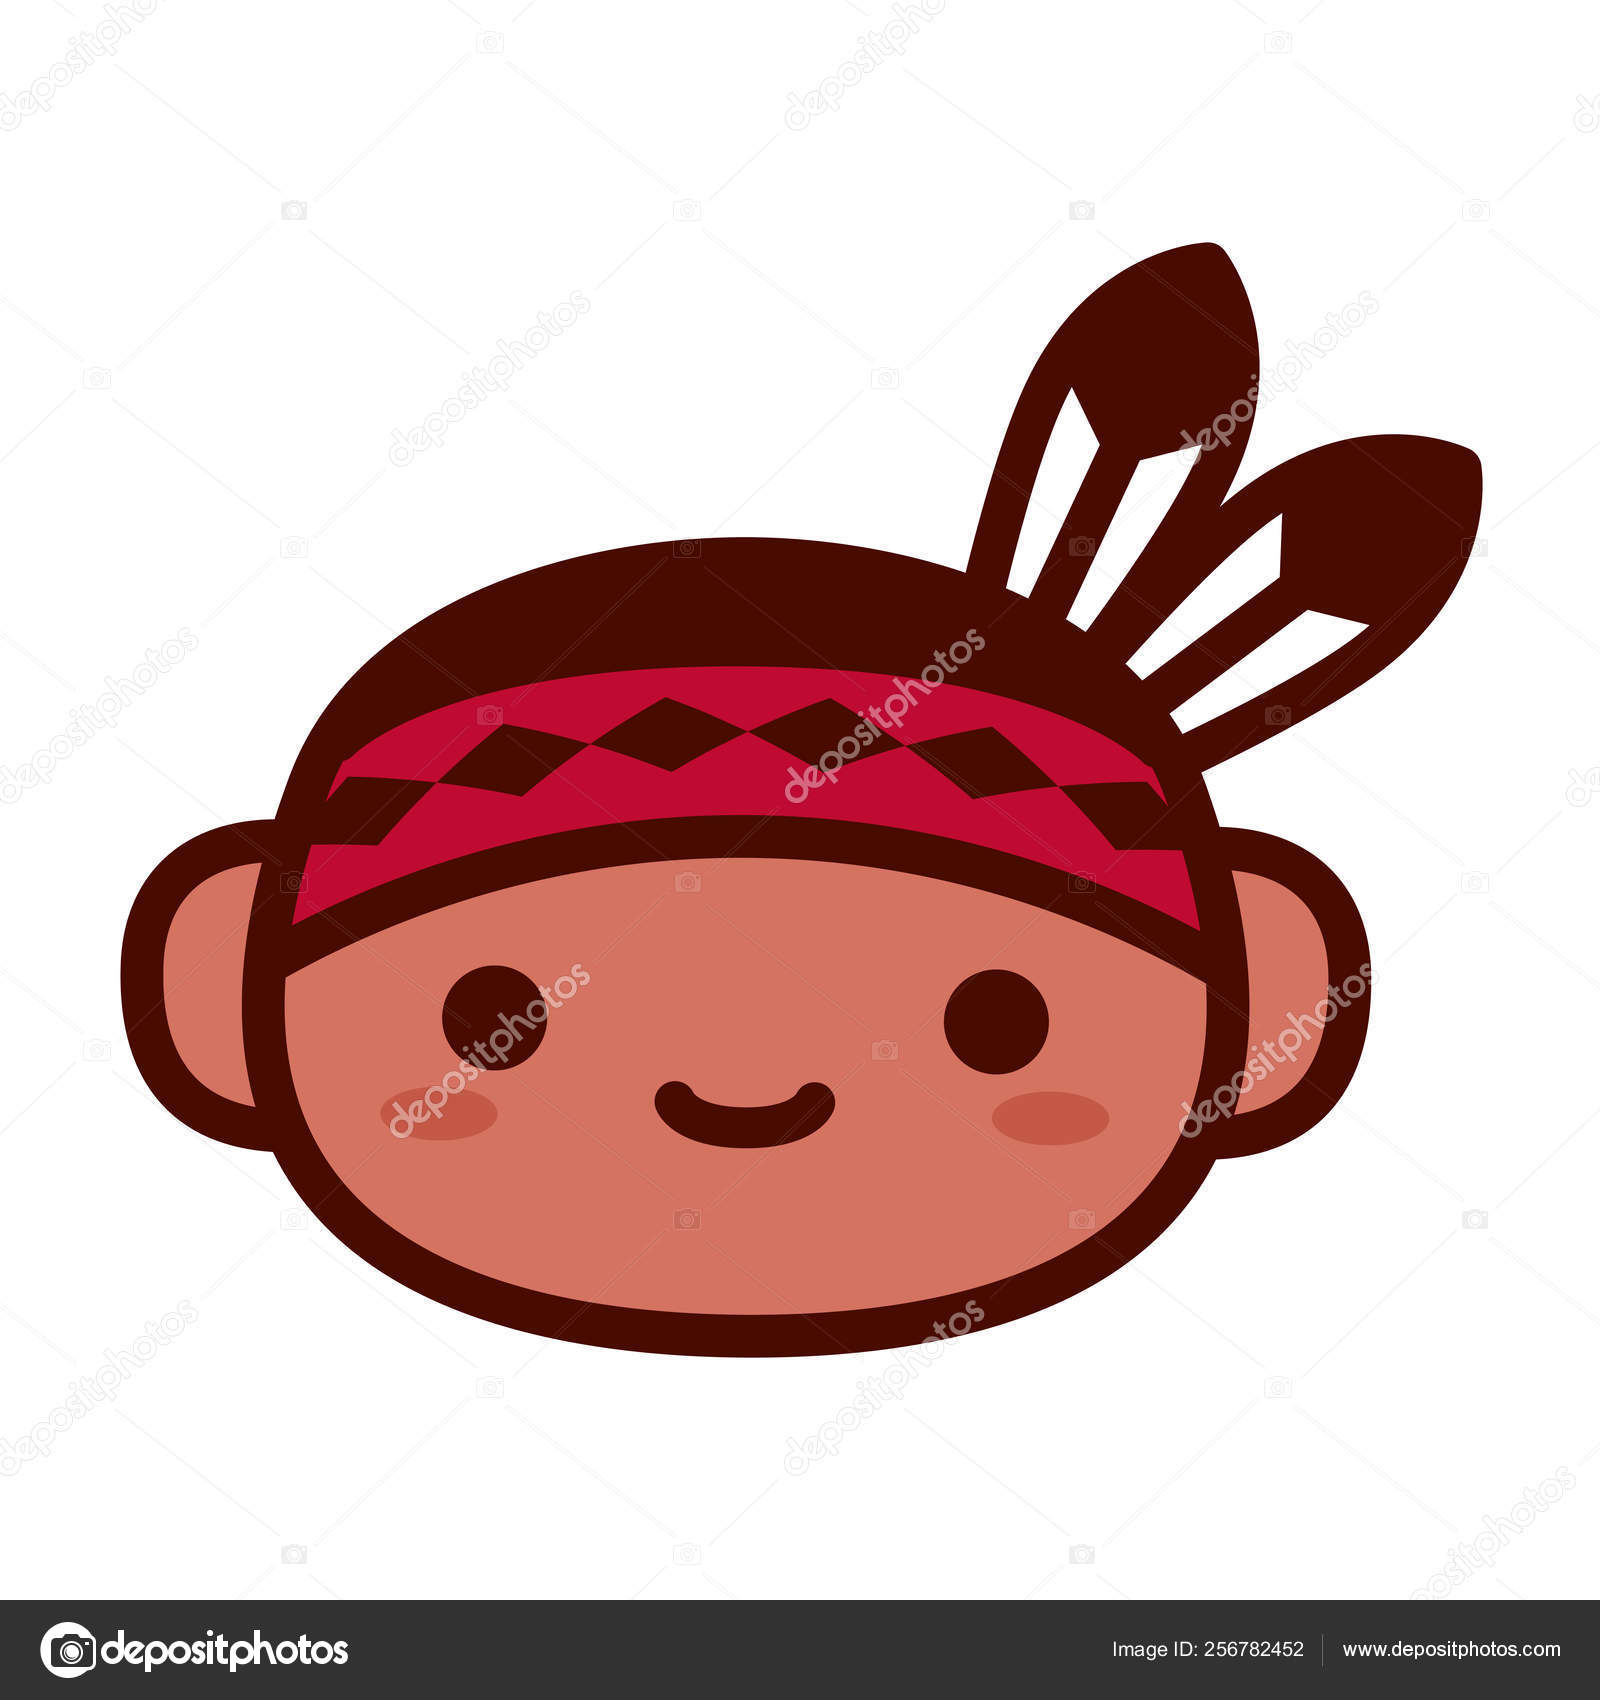 depositphotos_256782452-stock-illustration-cartoon-native-american-emoji-icon.jpg